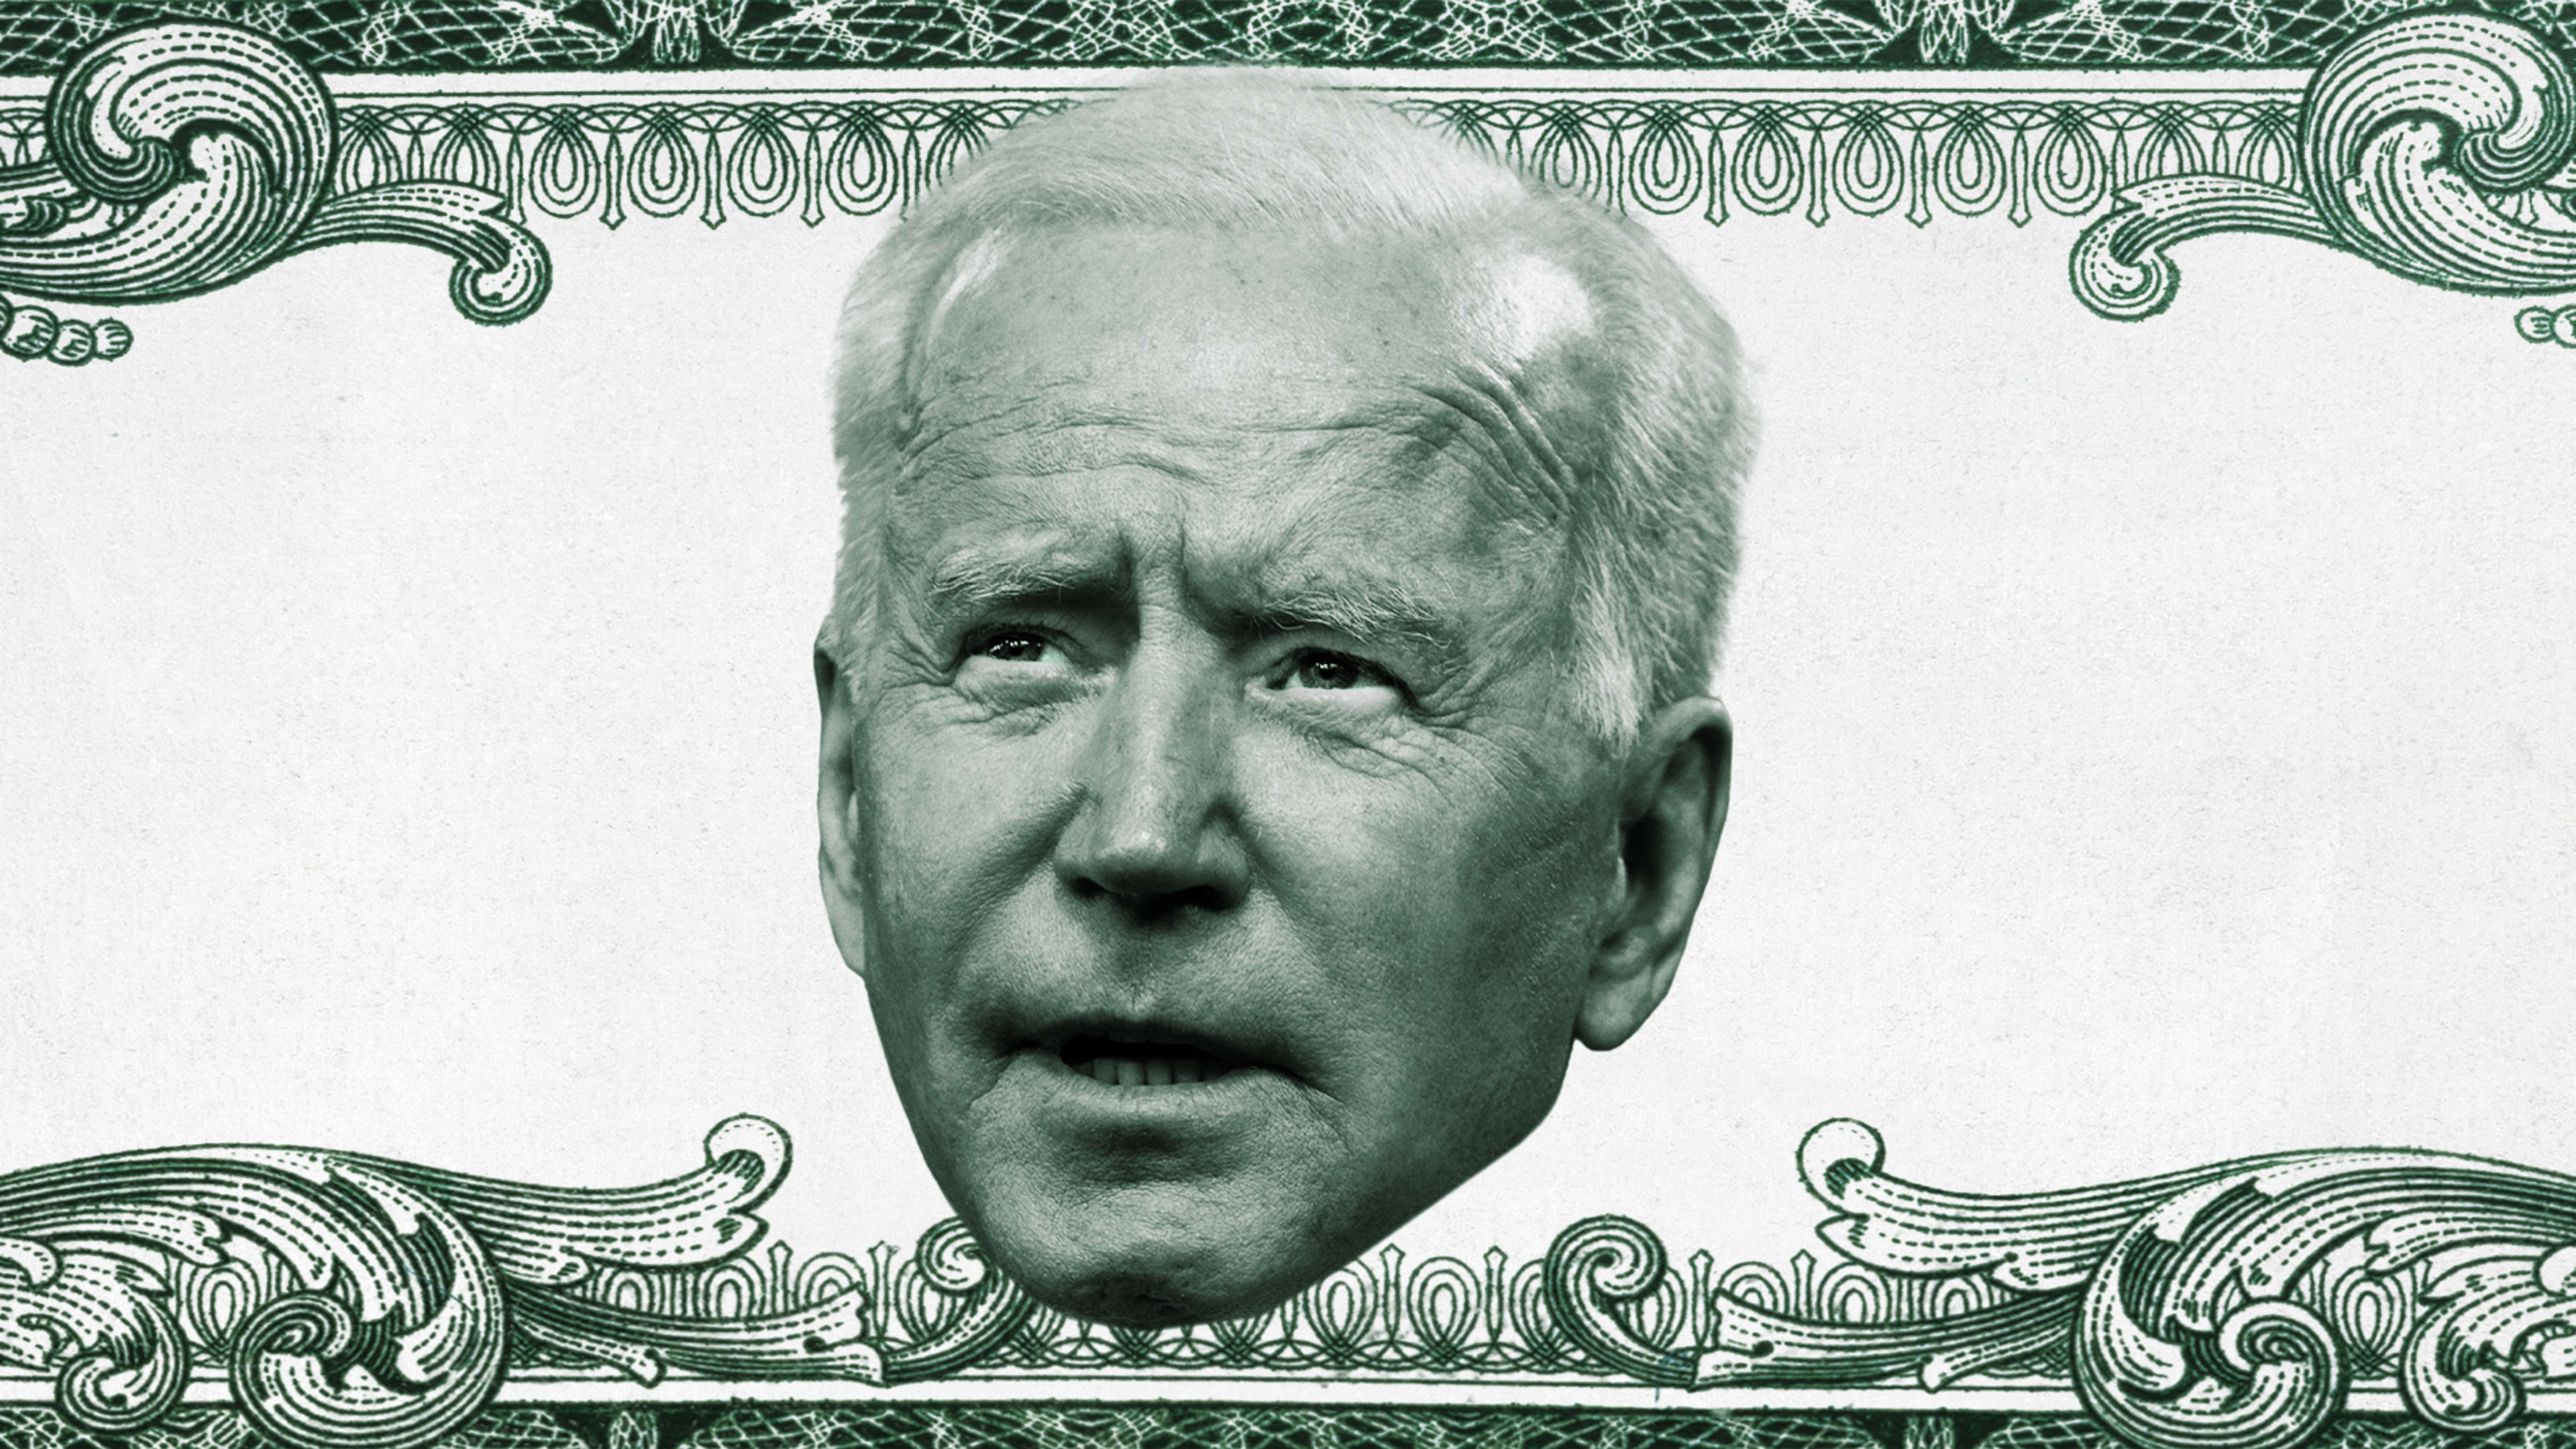 But seriously: Where are the stimulus checks, Joe?